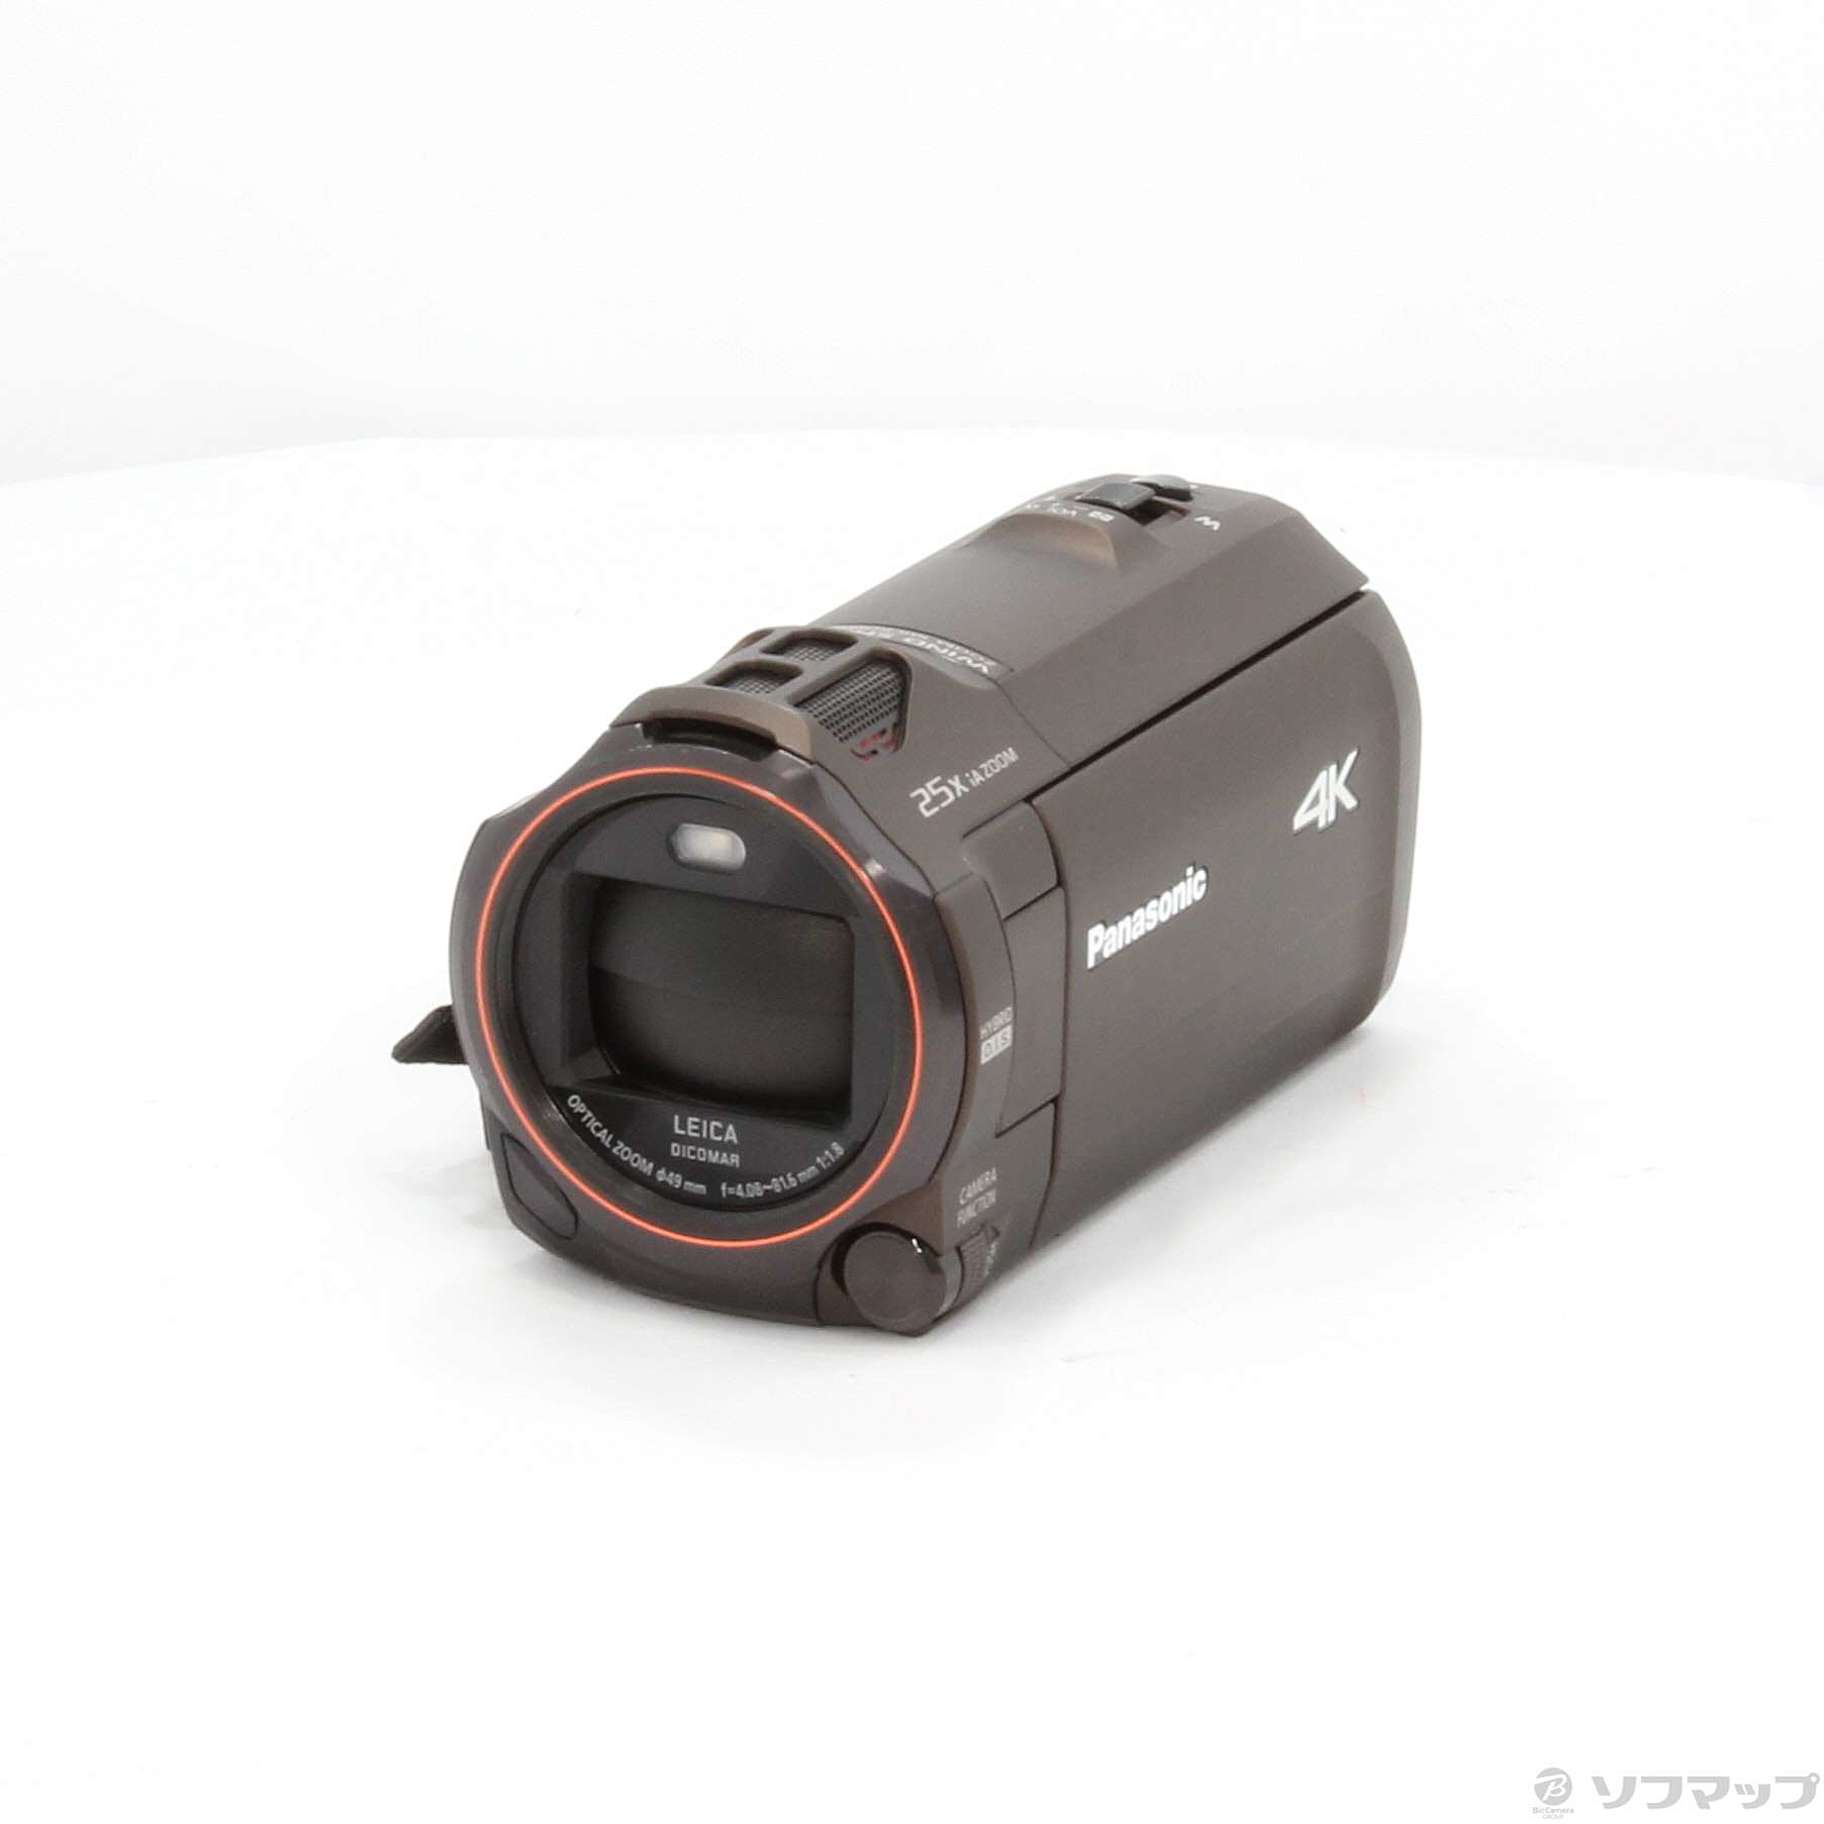 Panasonicビデオカメラ デジタル 4K HC-VX992M T ブラウン